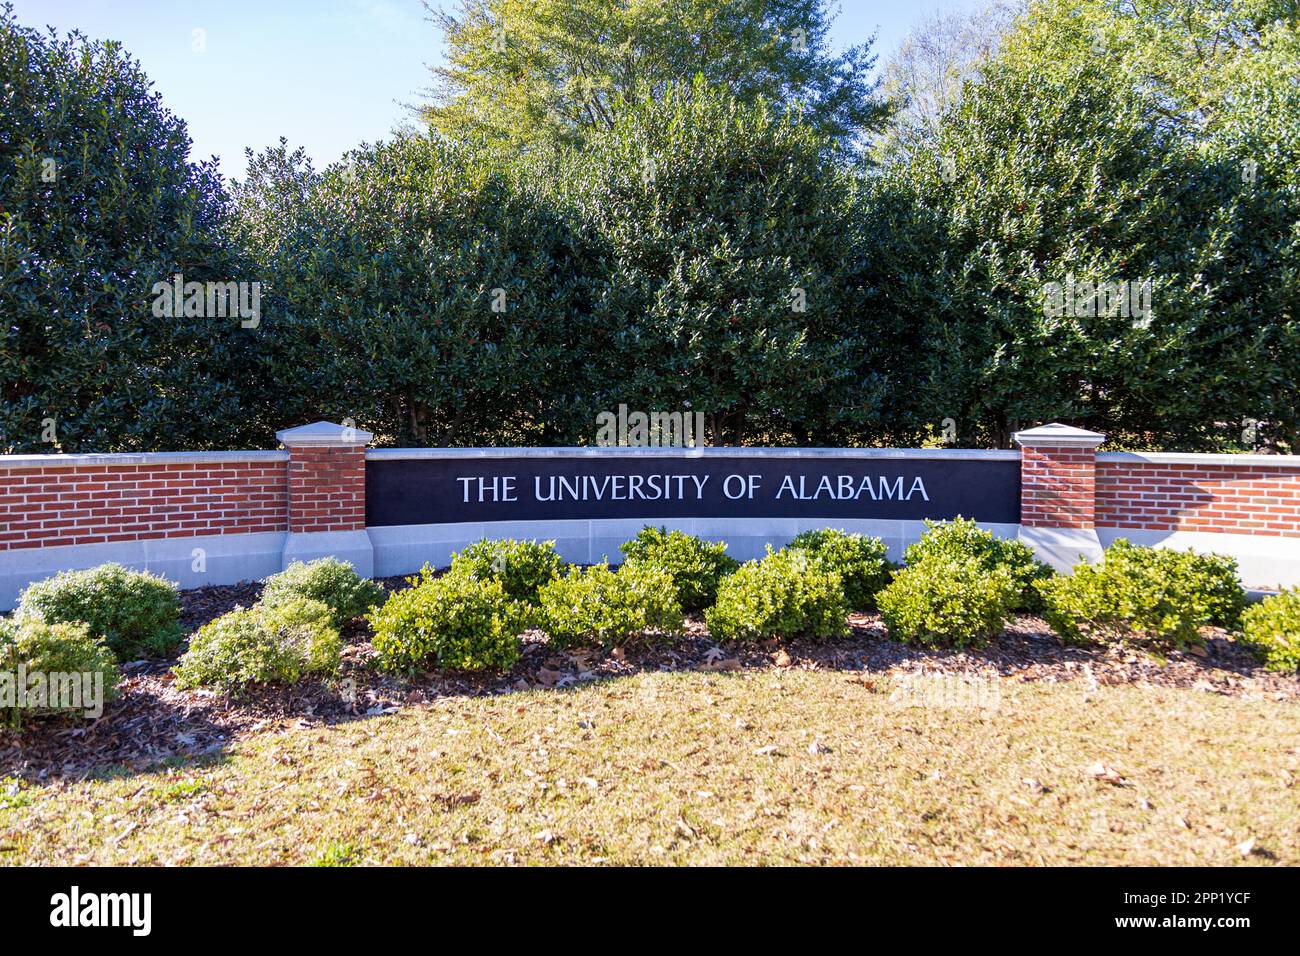 Tuscaloosa, AL - January 2022: The University of Alabama sign on campus Stock Photo